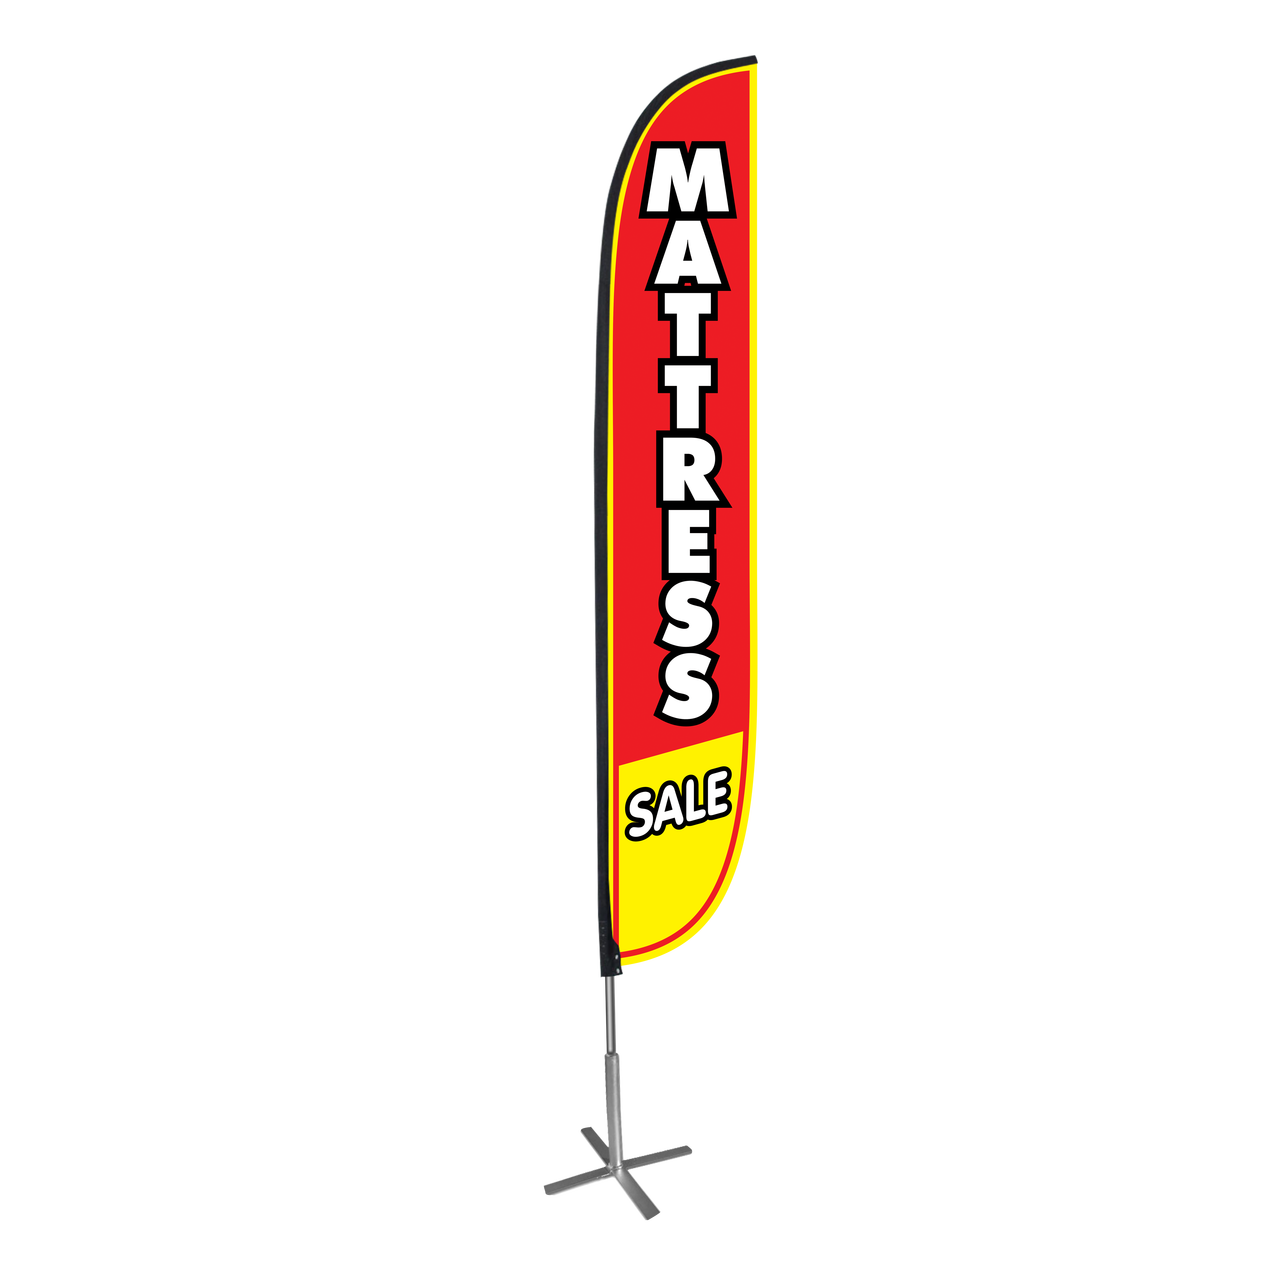 12ft Mattress Sale Feather Flag